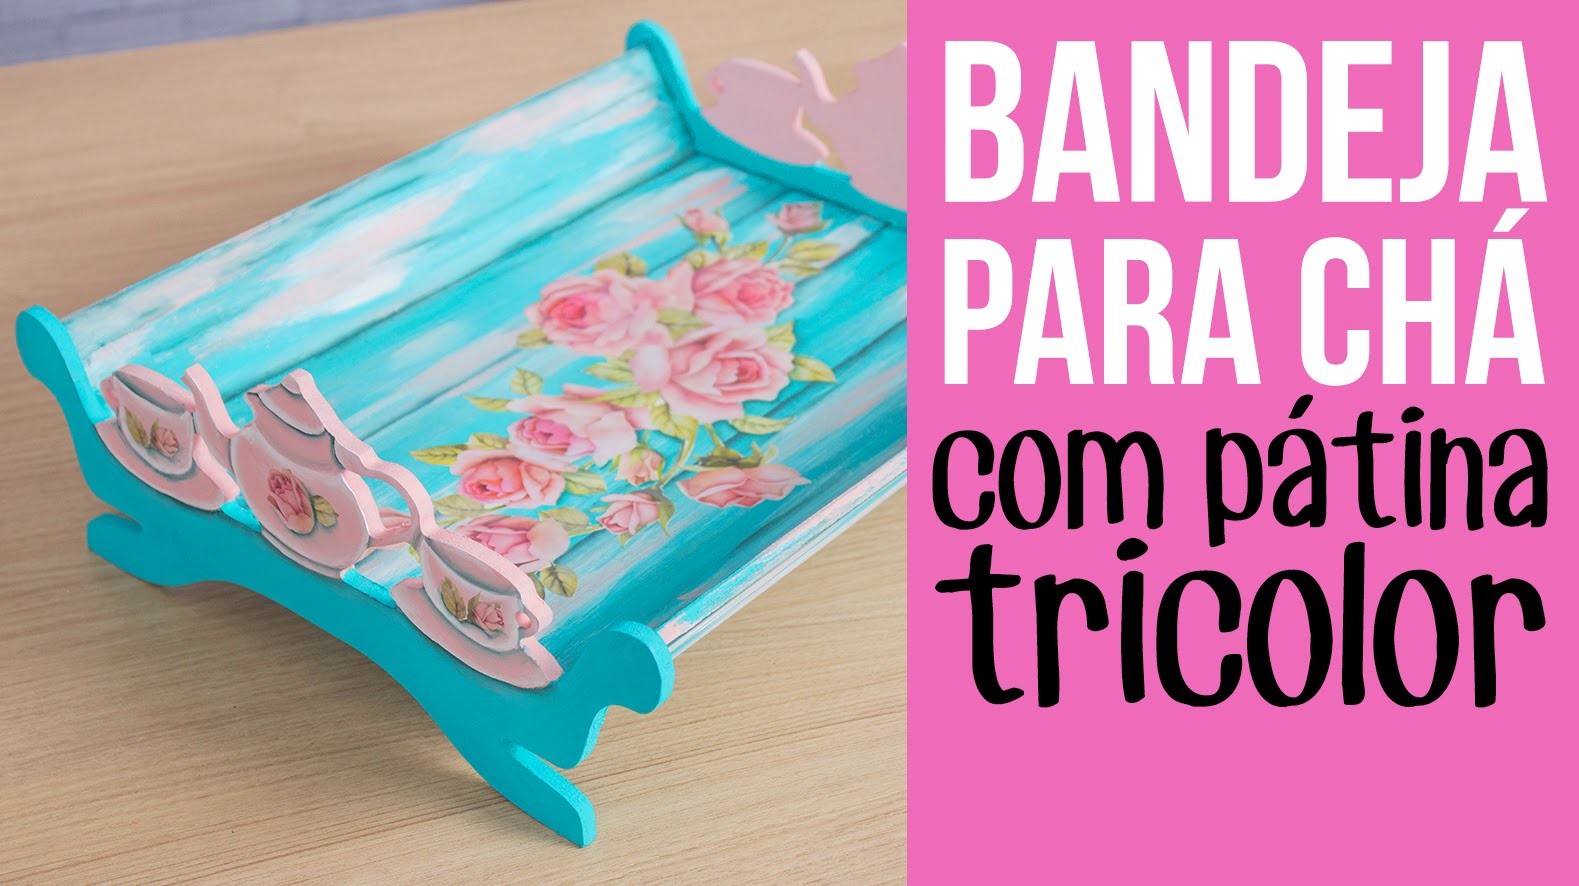 Bandeja com pátina tricolor. Three colored patina on tray {with subtitles.sottotitolo}